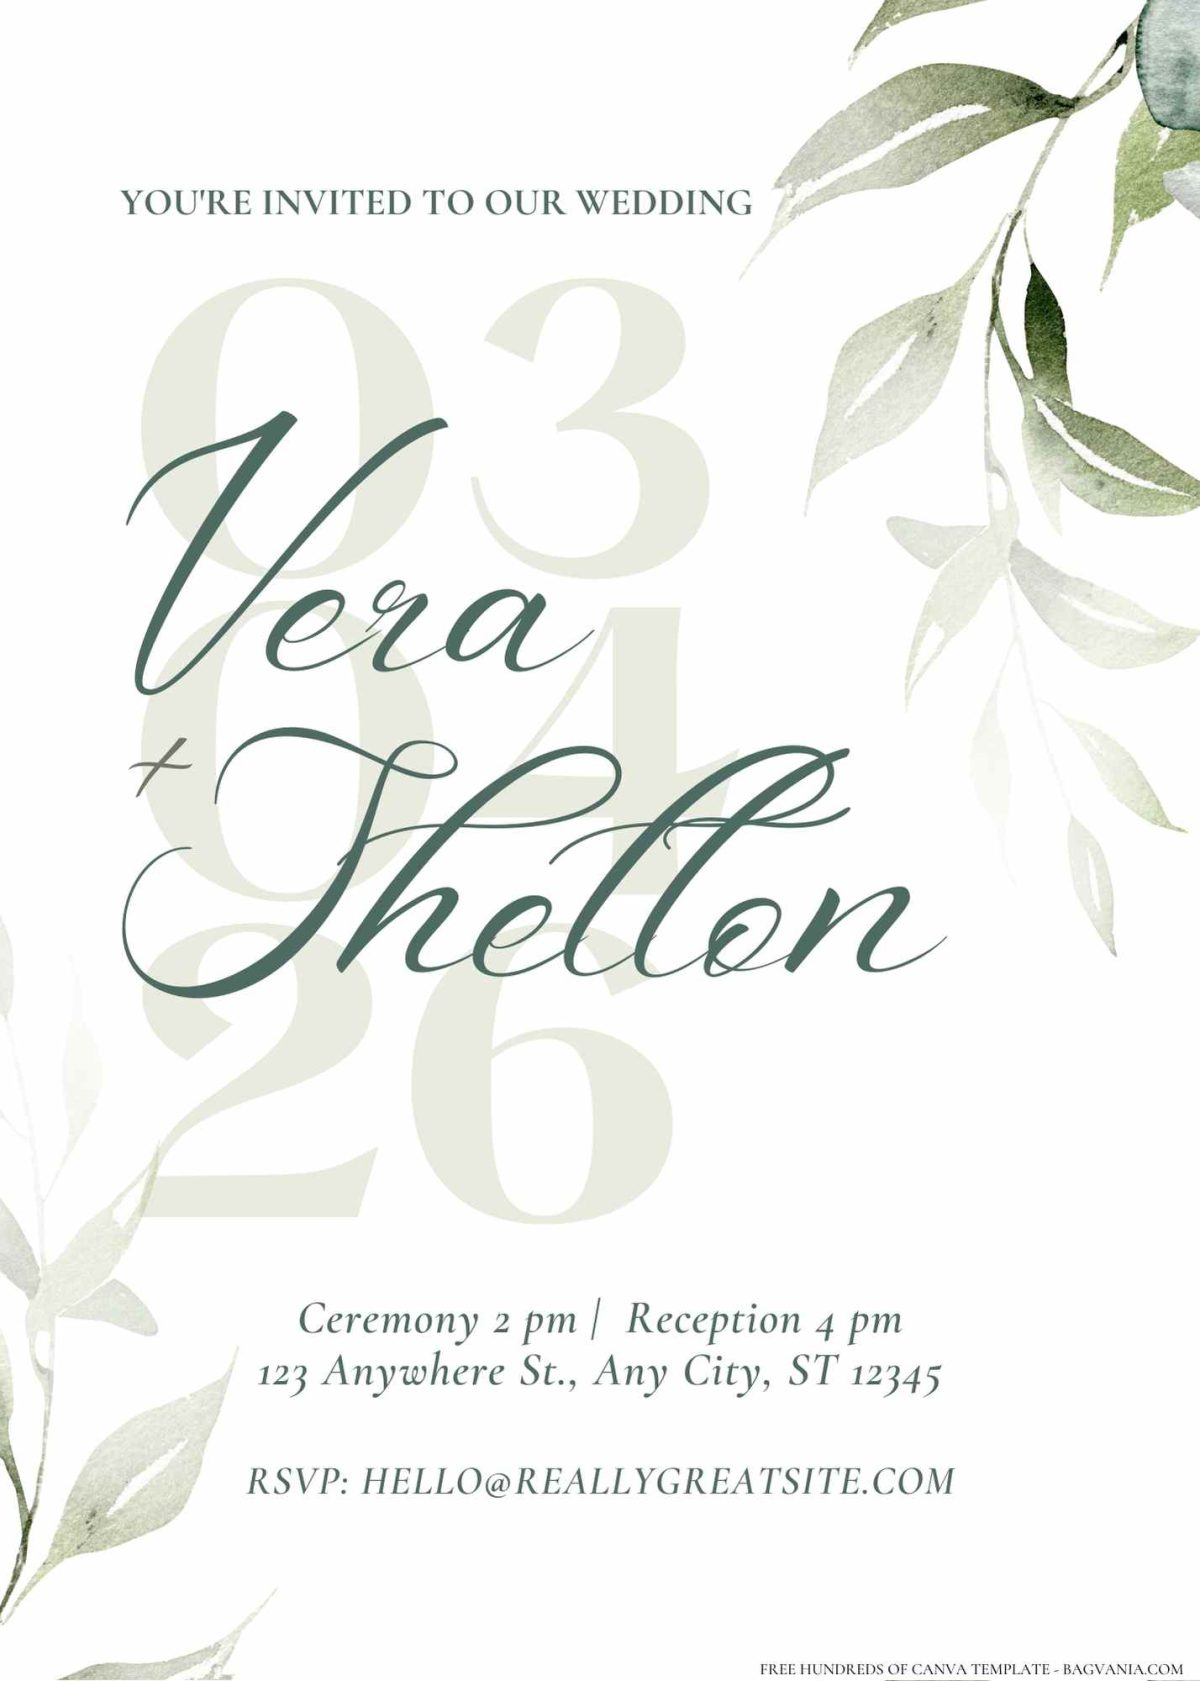 FREE Editable floral wreaths framing the wedding details wedding invitation